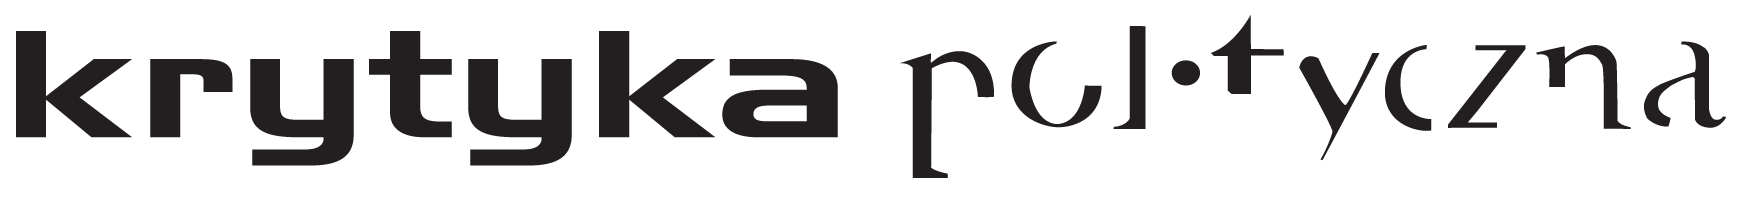 krytyka-logo.png